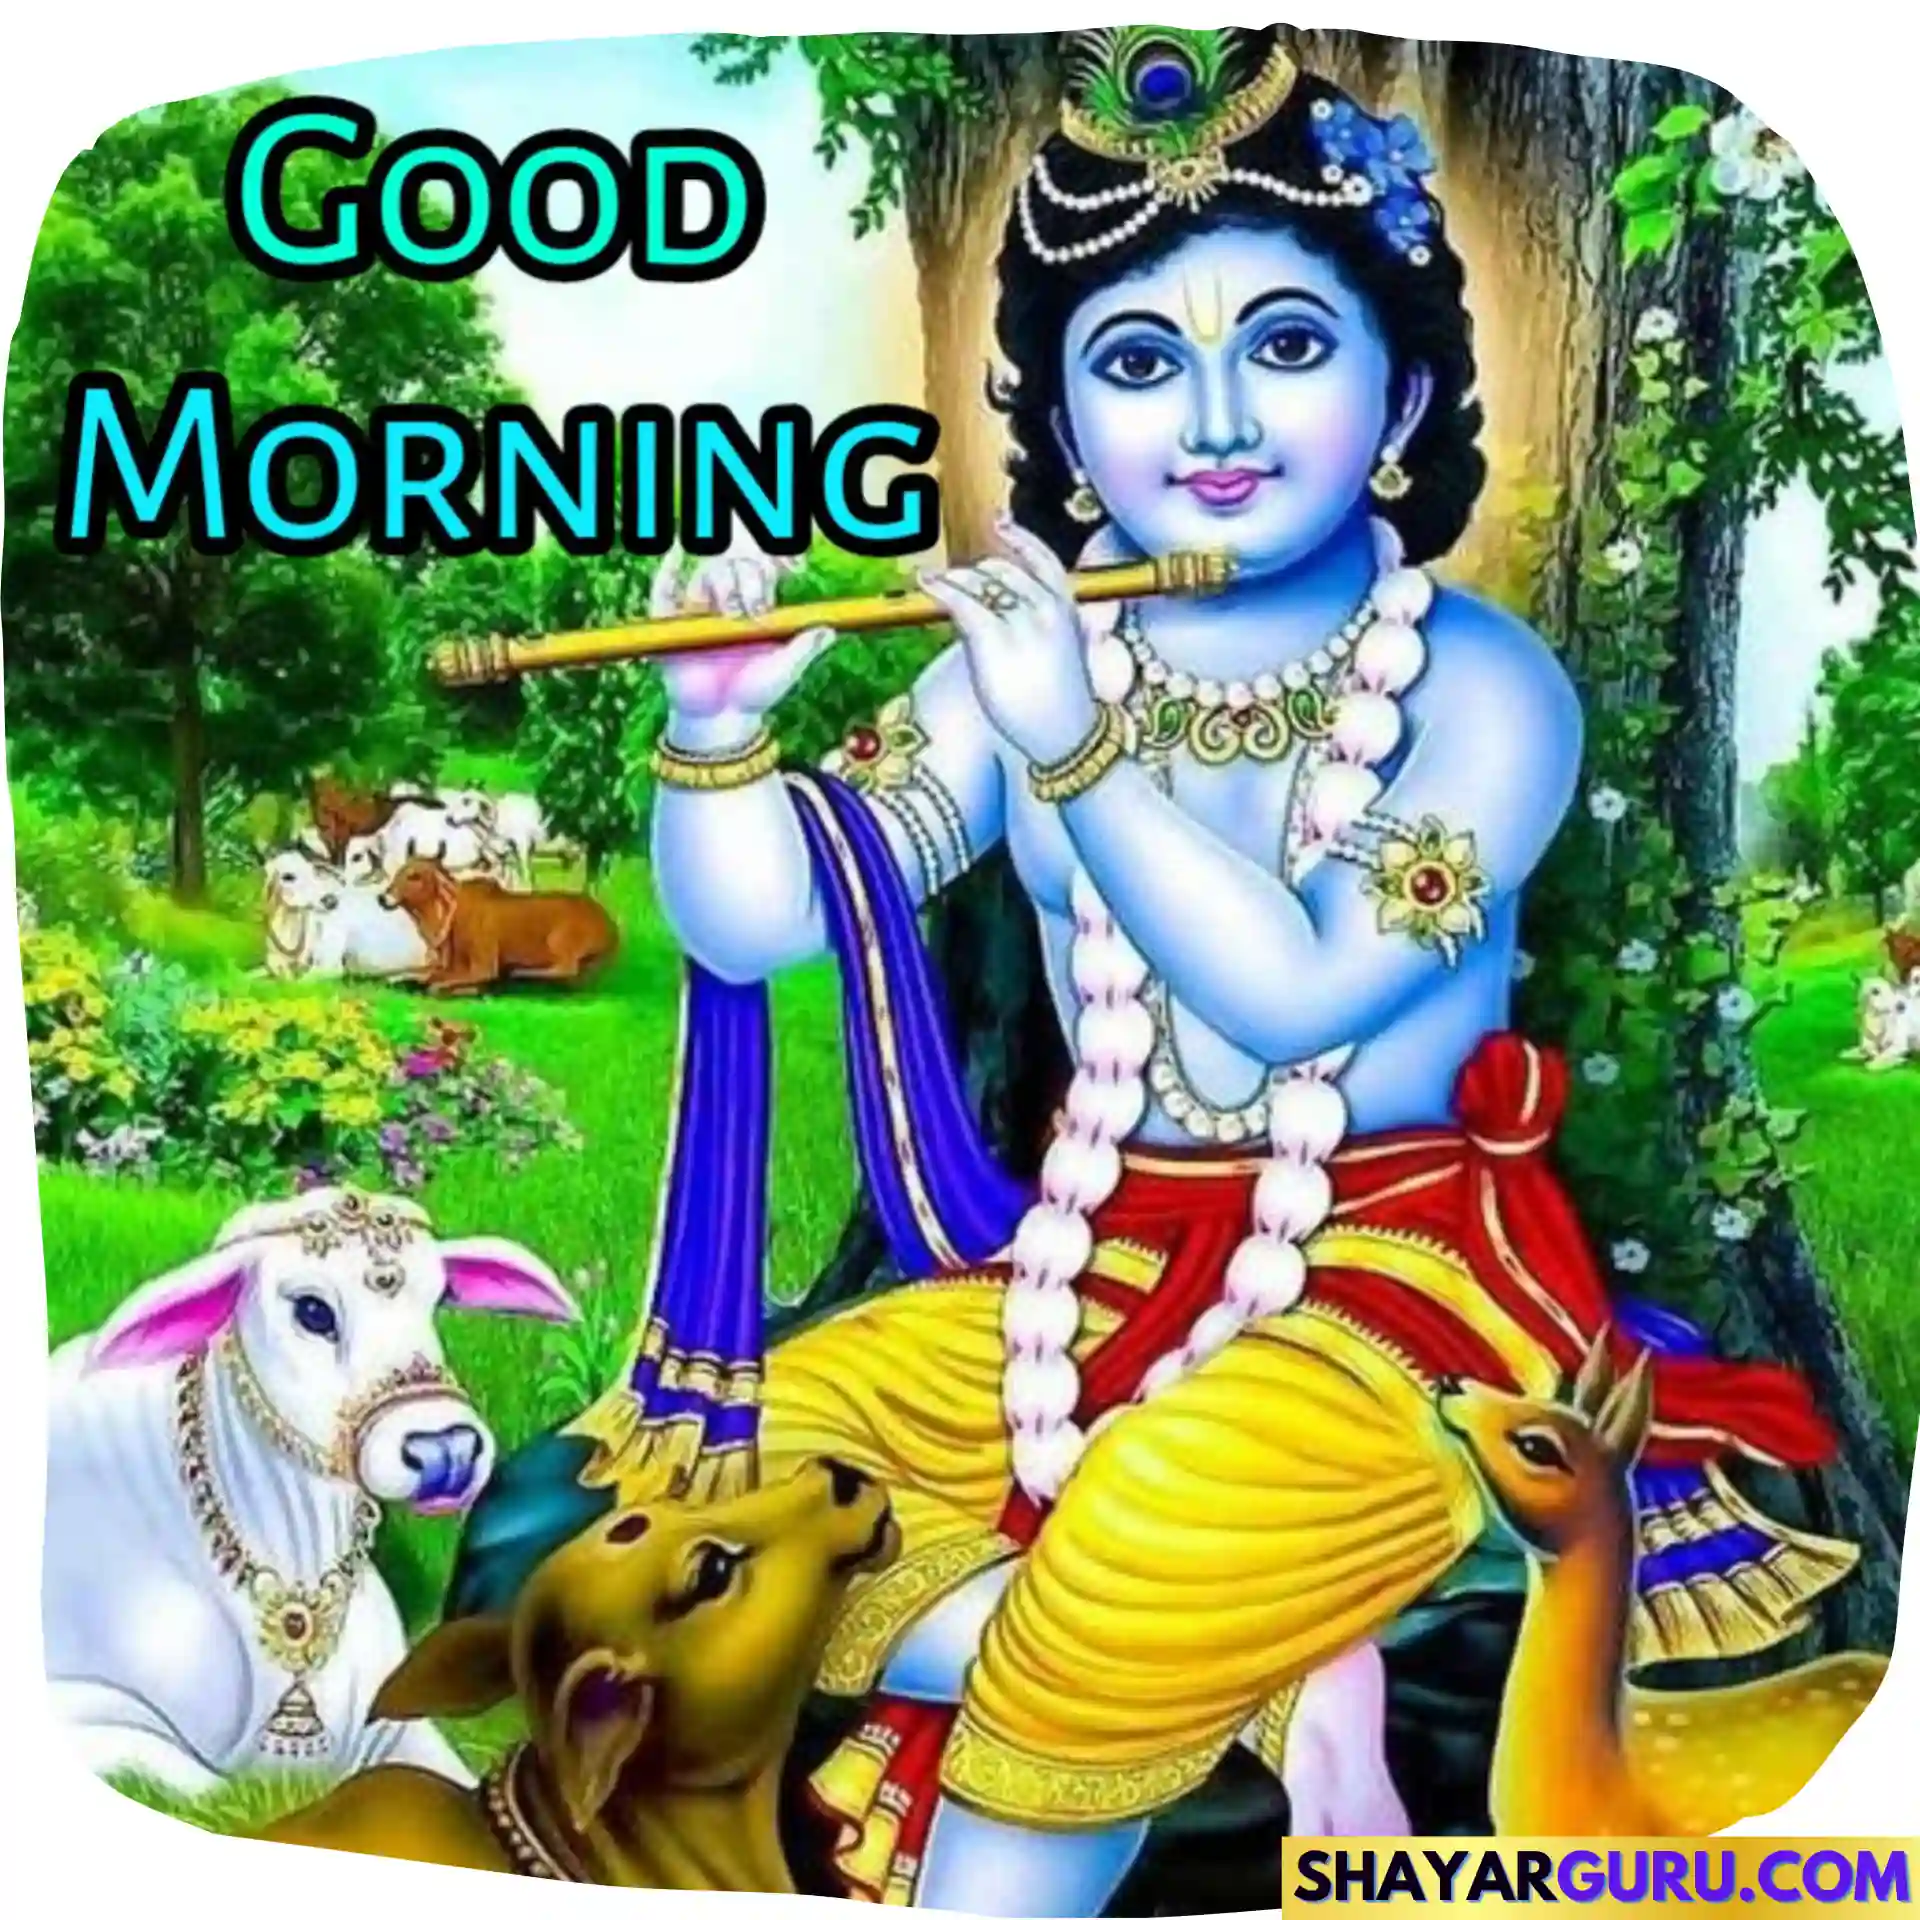 Krishan bhagwan image good morning